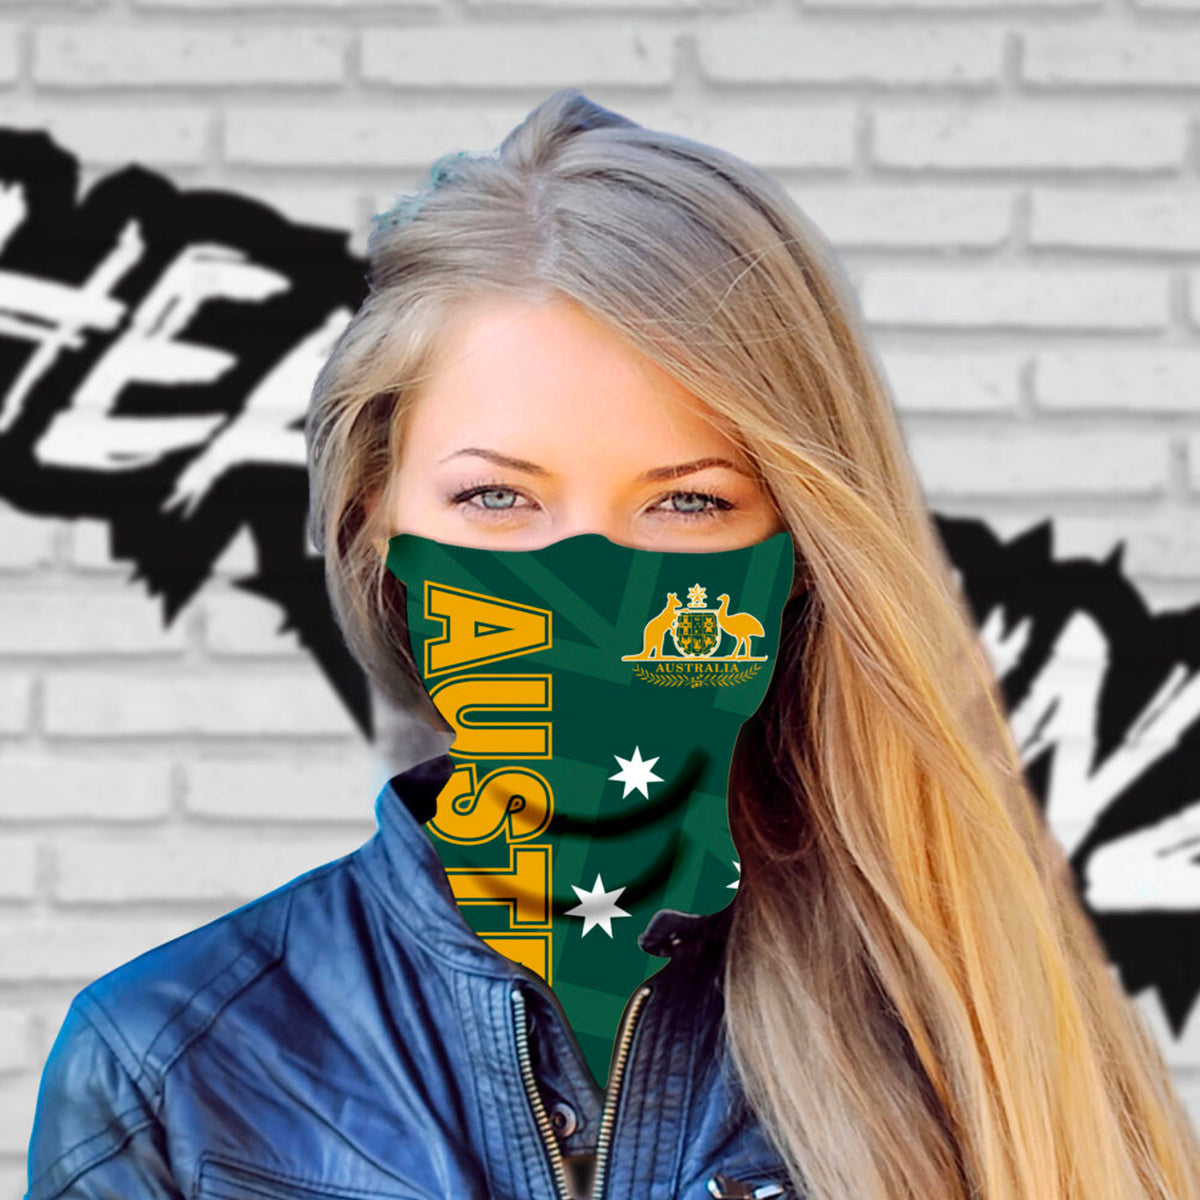 headskinz australian green and gold flag head sock